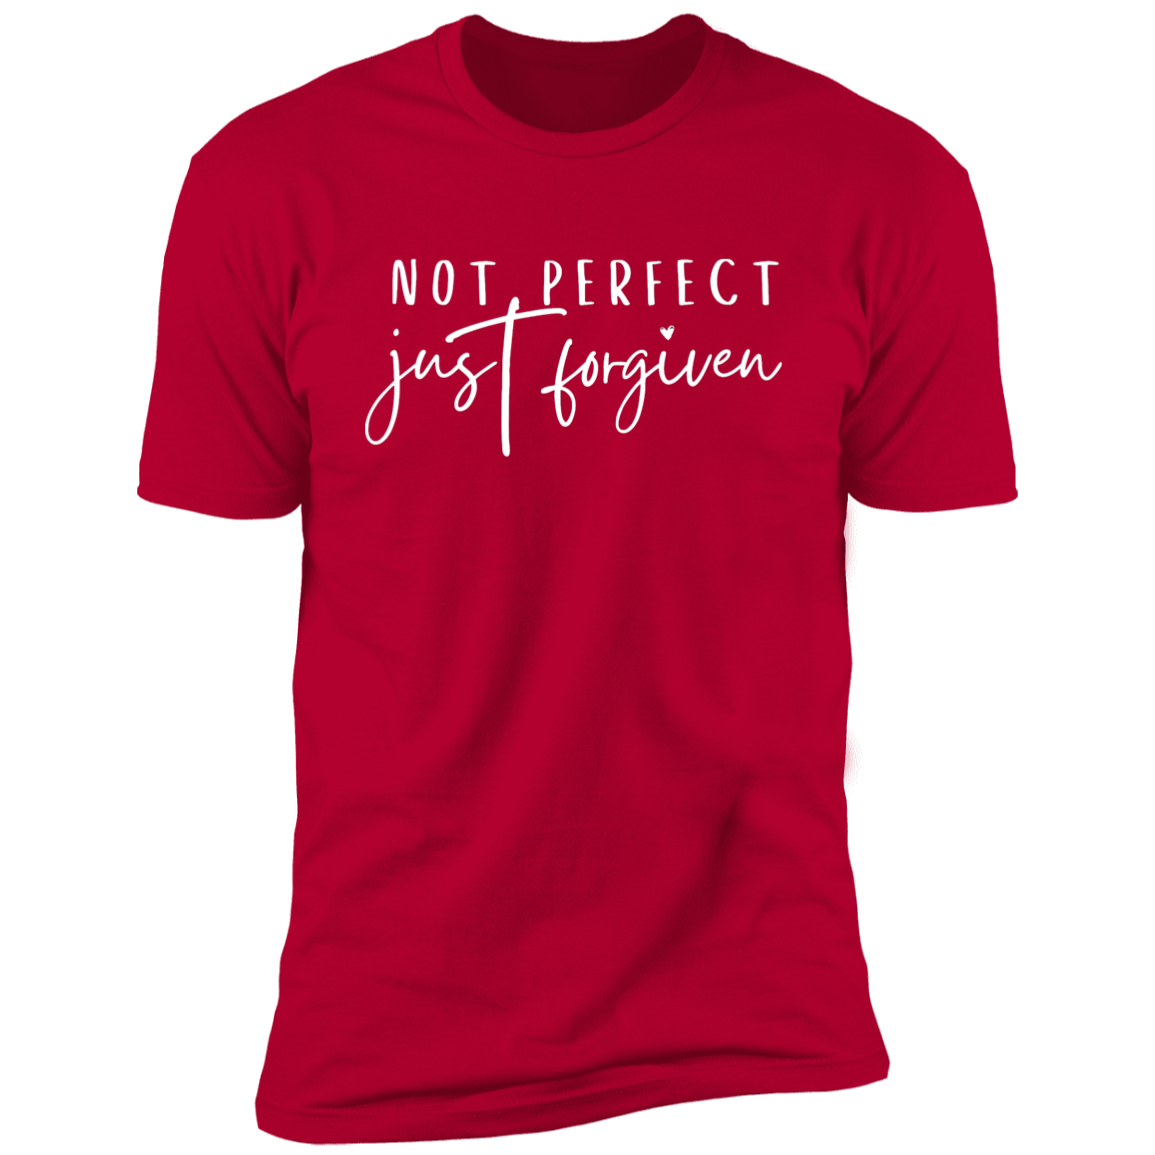 Not Perfect T-Shirt